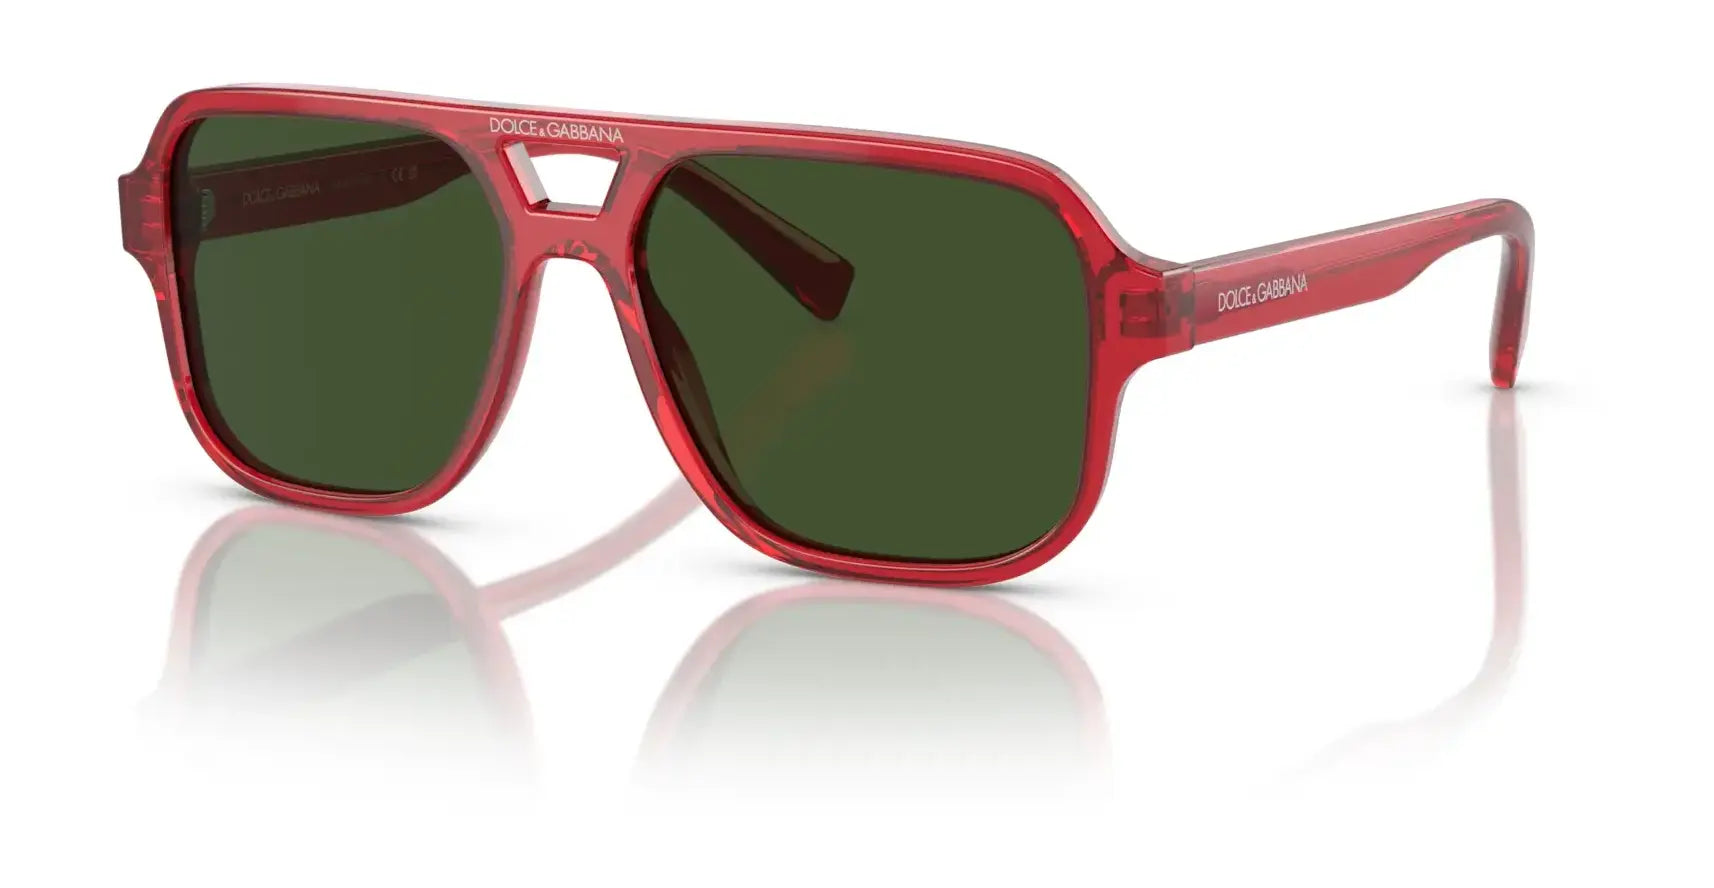 Dolce&Gabbana DX4003 Sunglasses Red / Dark Green